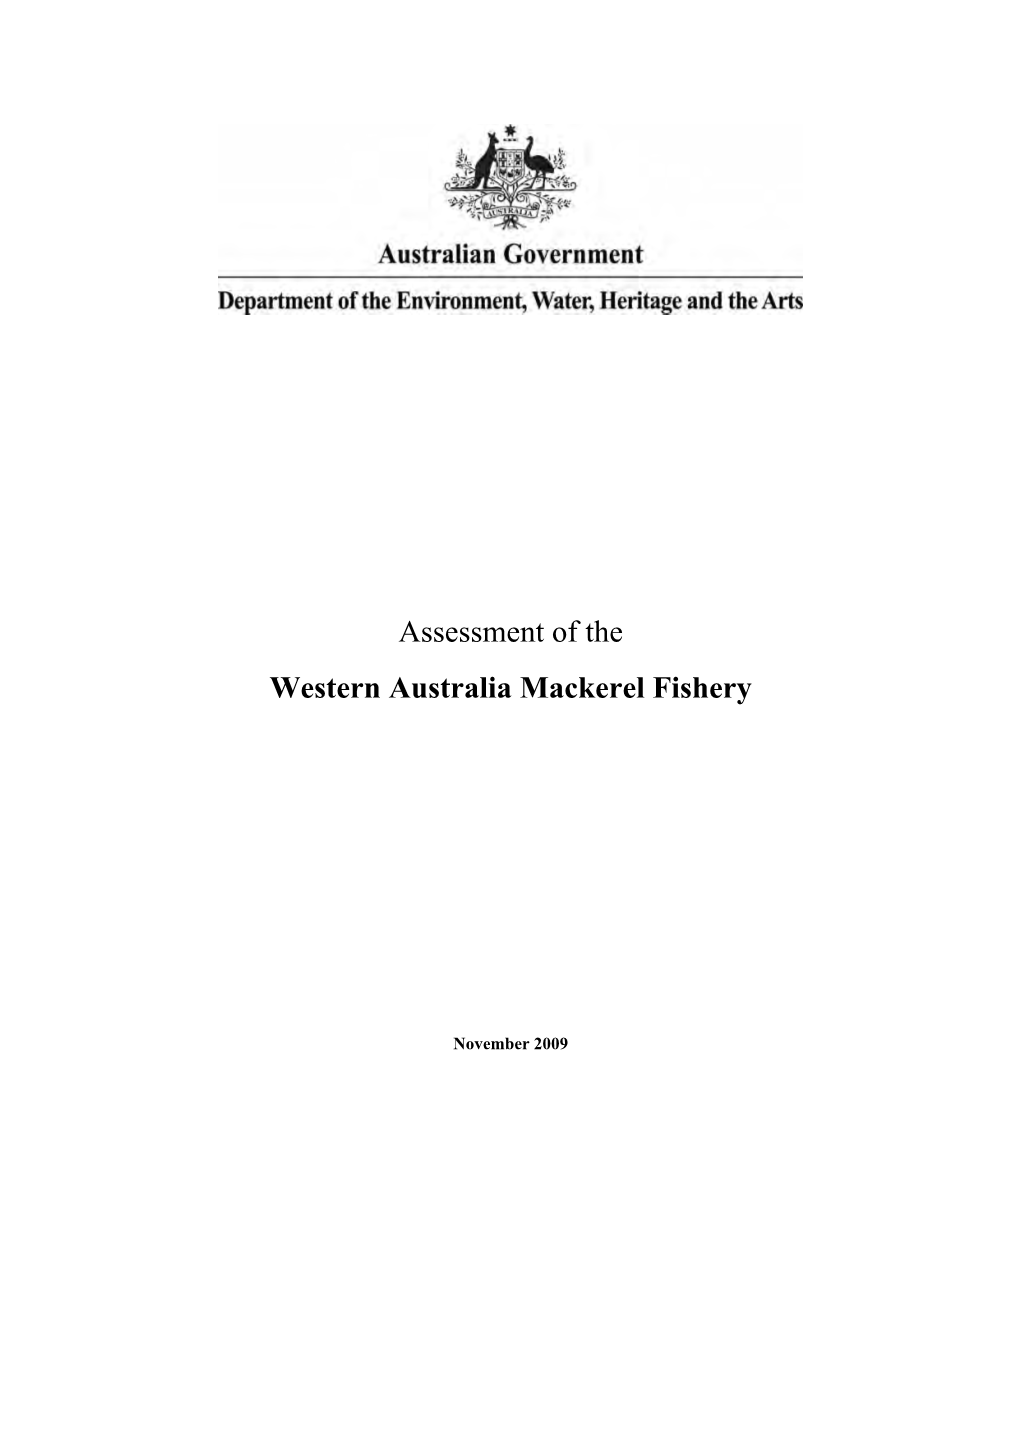 Assessment of the Western Australia Mackerel Fishery